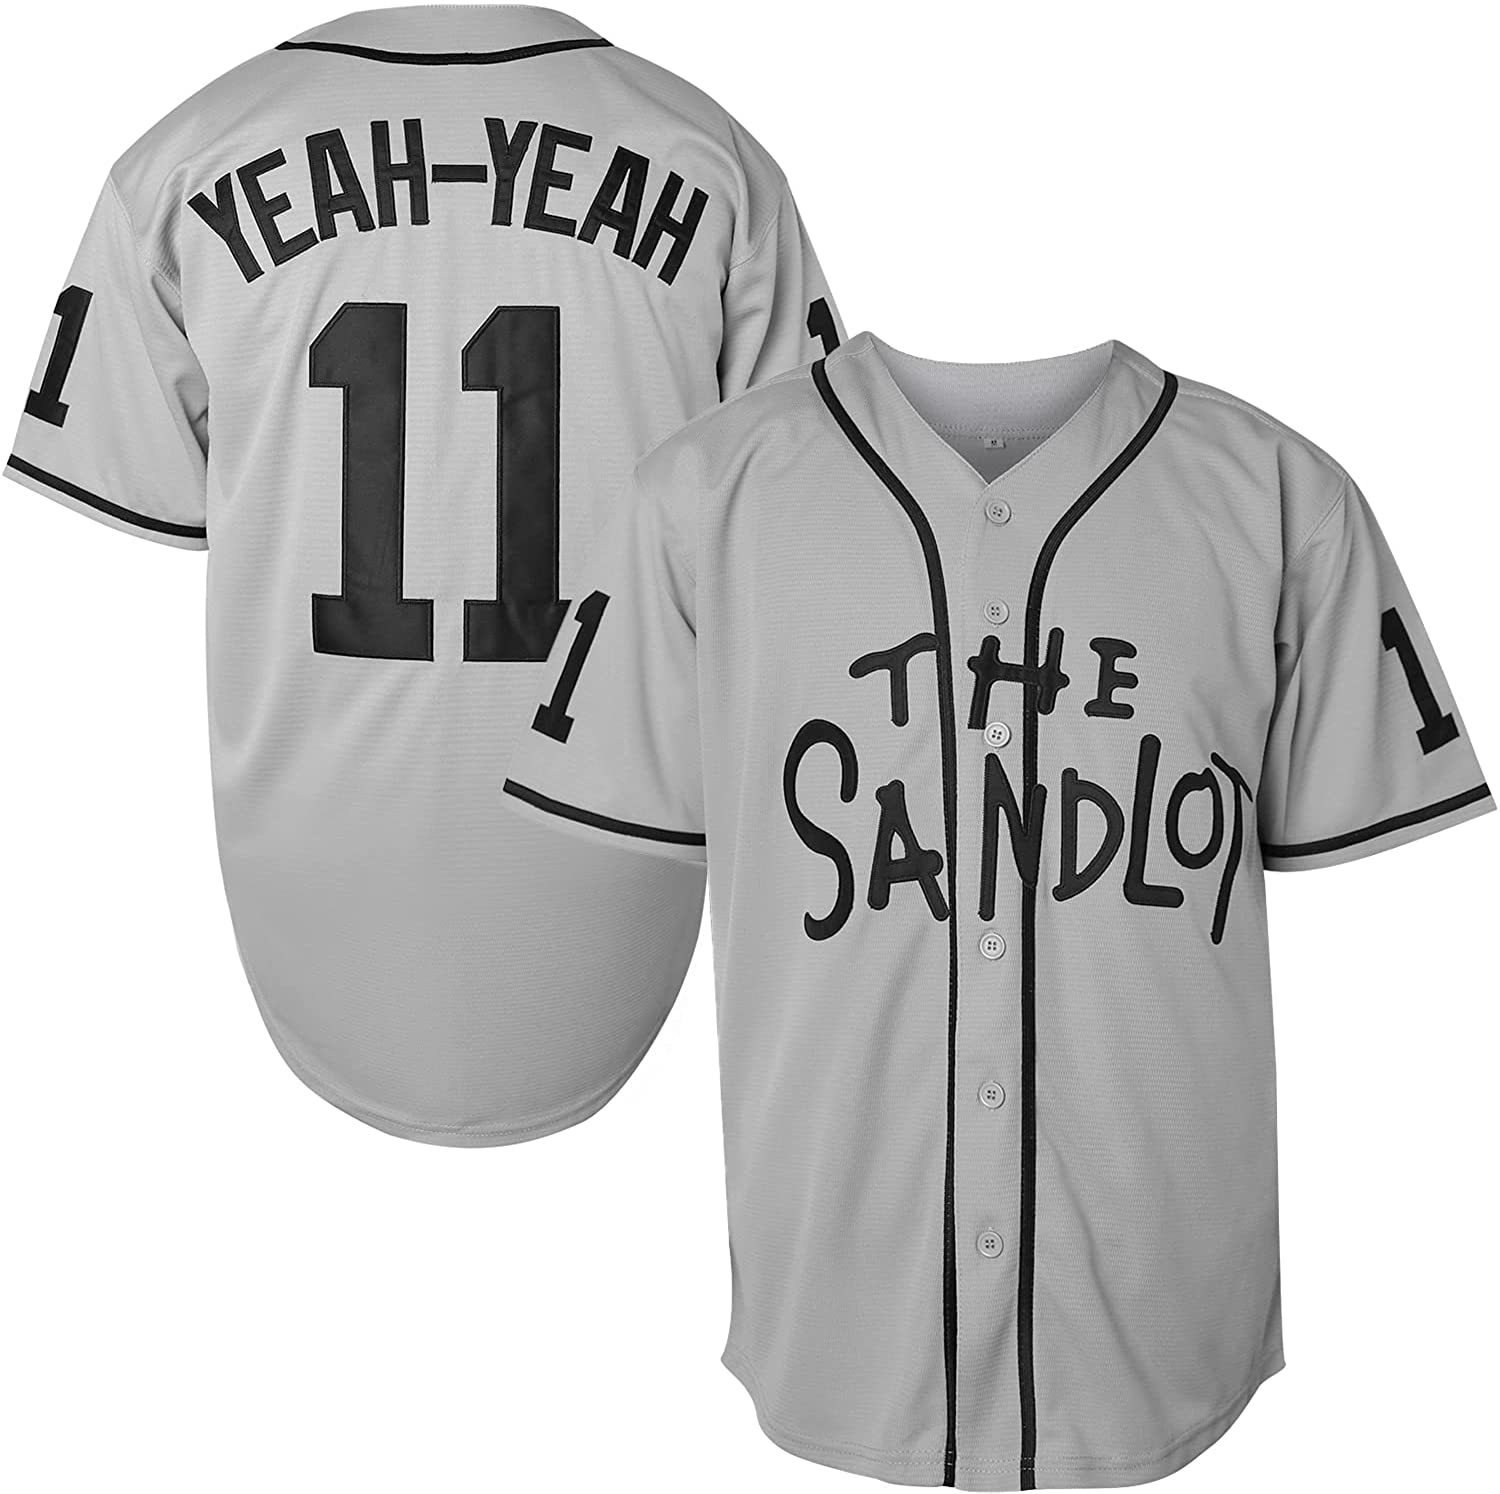 Alan Yeah-Yeah McClennan #11 The Sandlot Movie Baseball Jersey New Gray